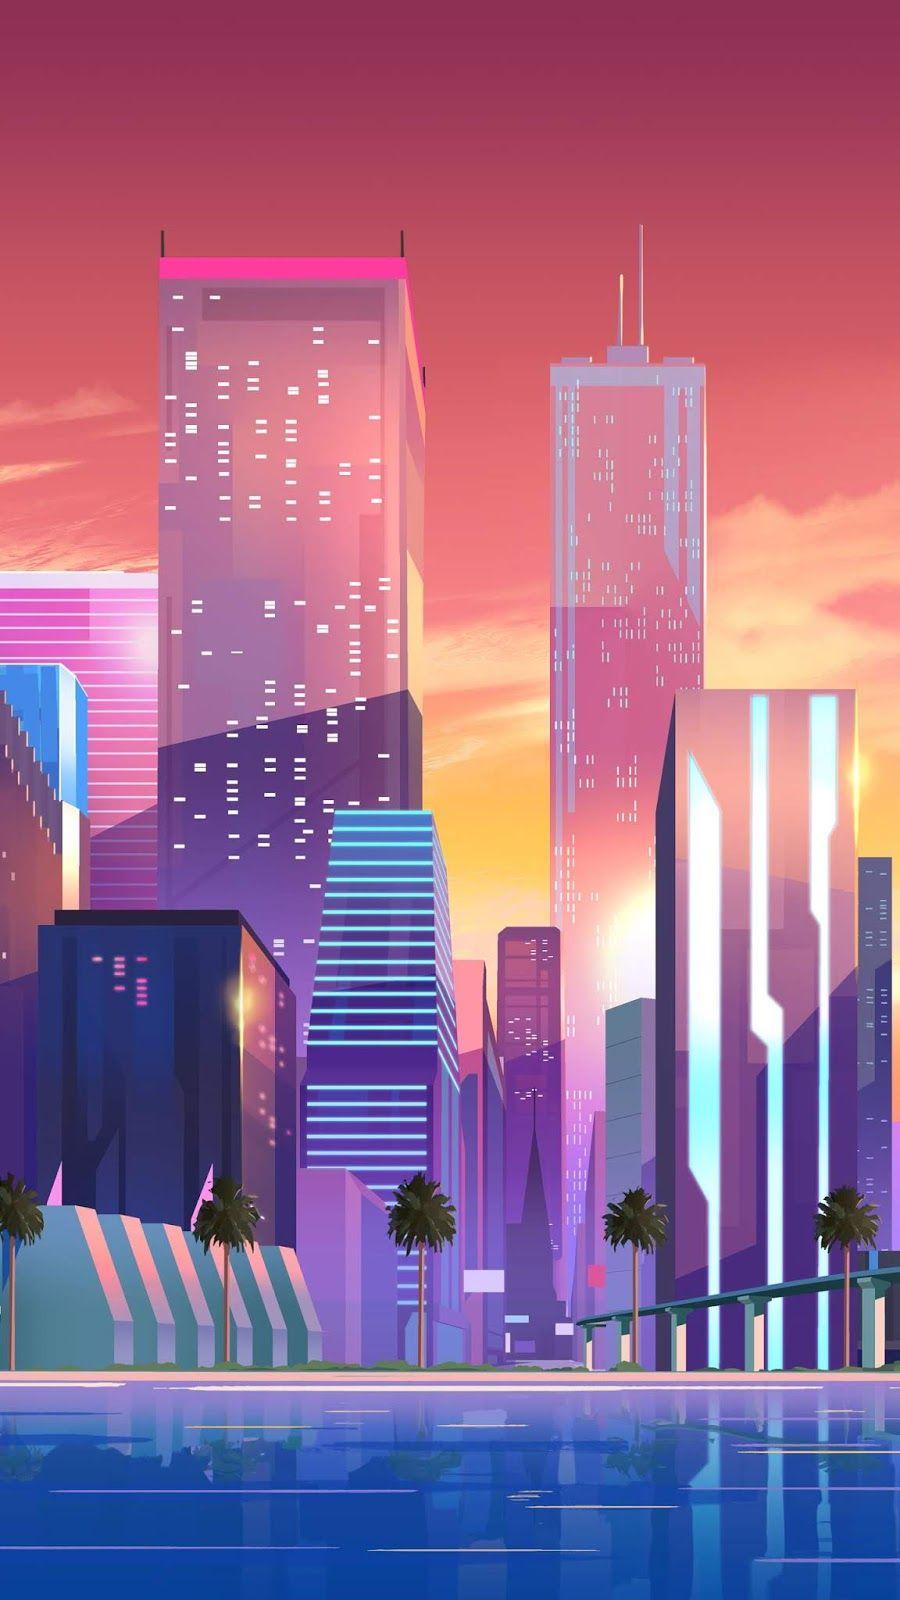 Los Angeles City Tour Cityscape Skyline Colorful Illustration